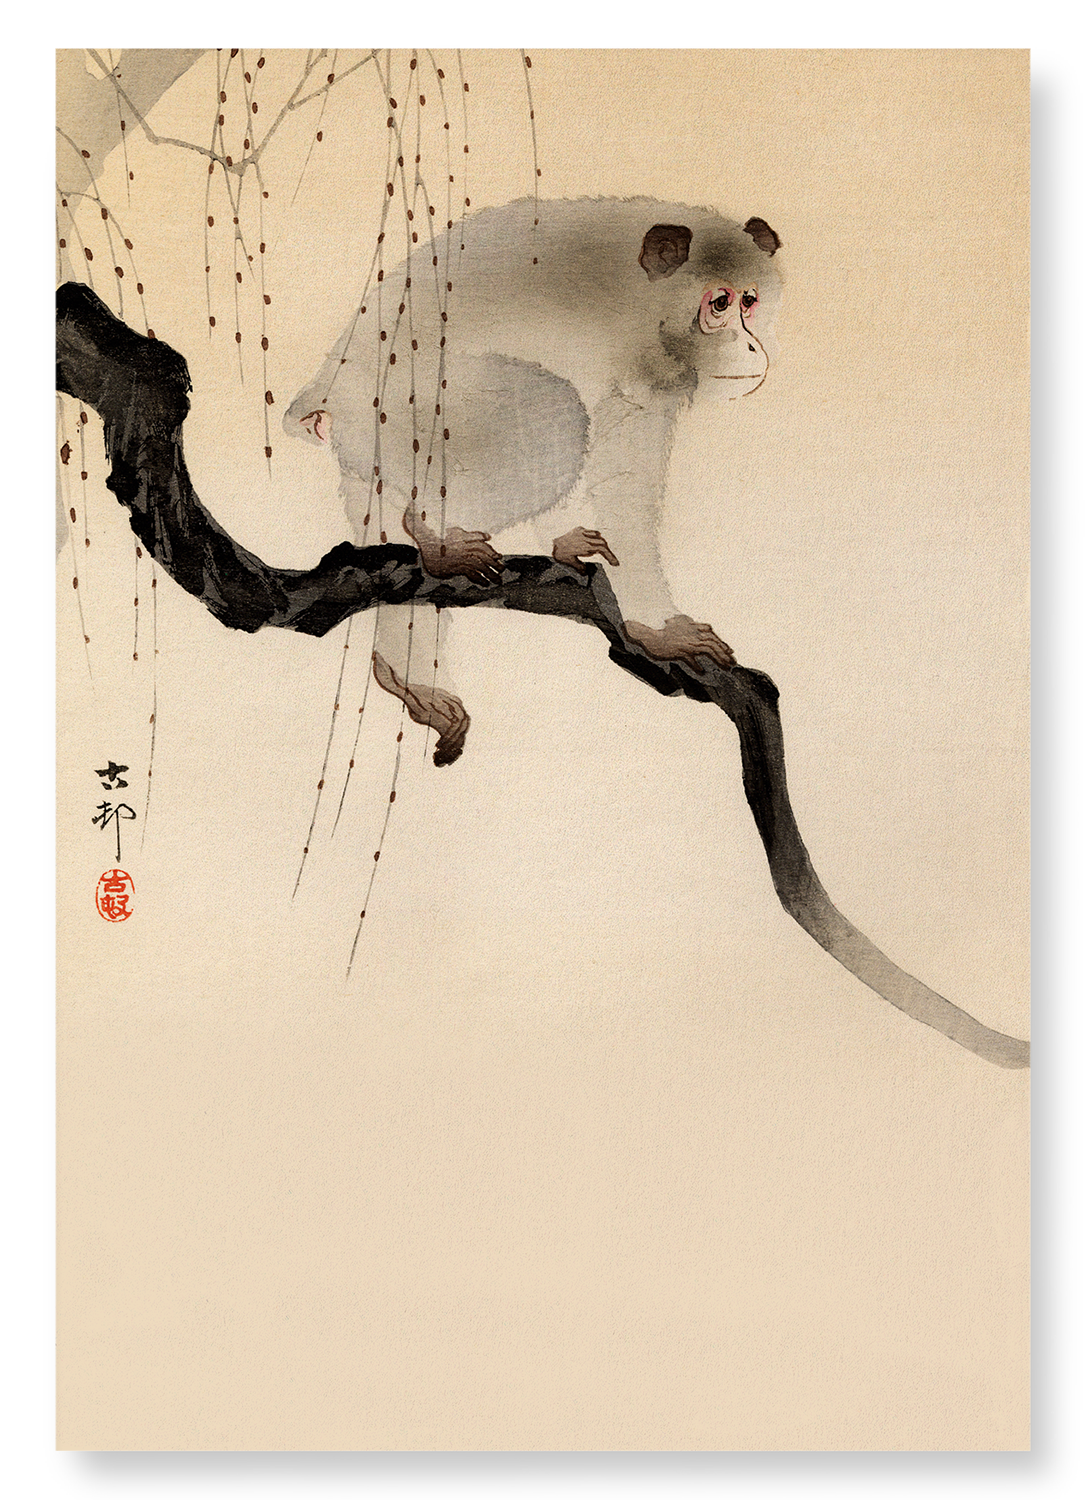 MONKEY IN A TREE: Japanese Art Print